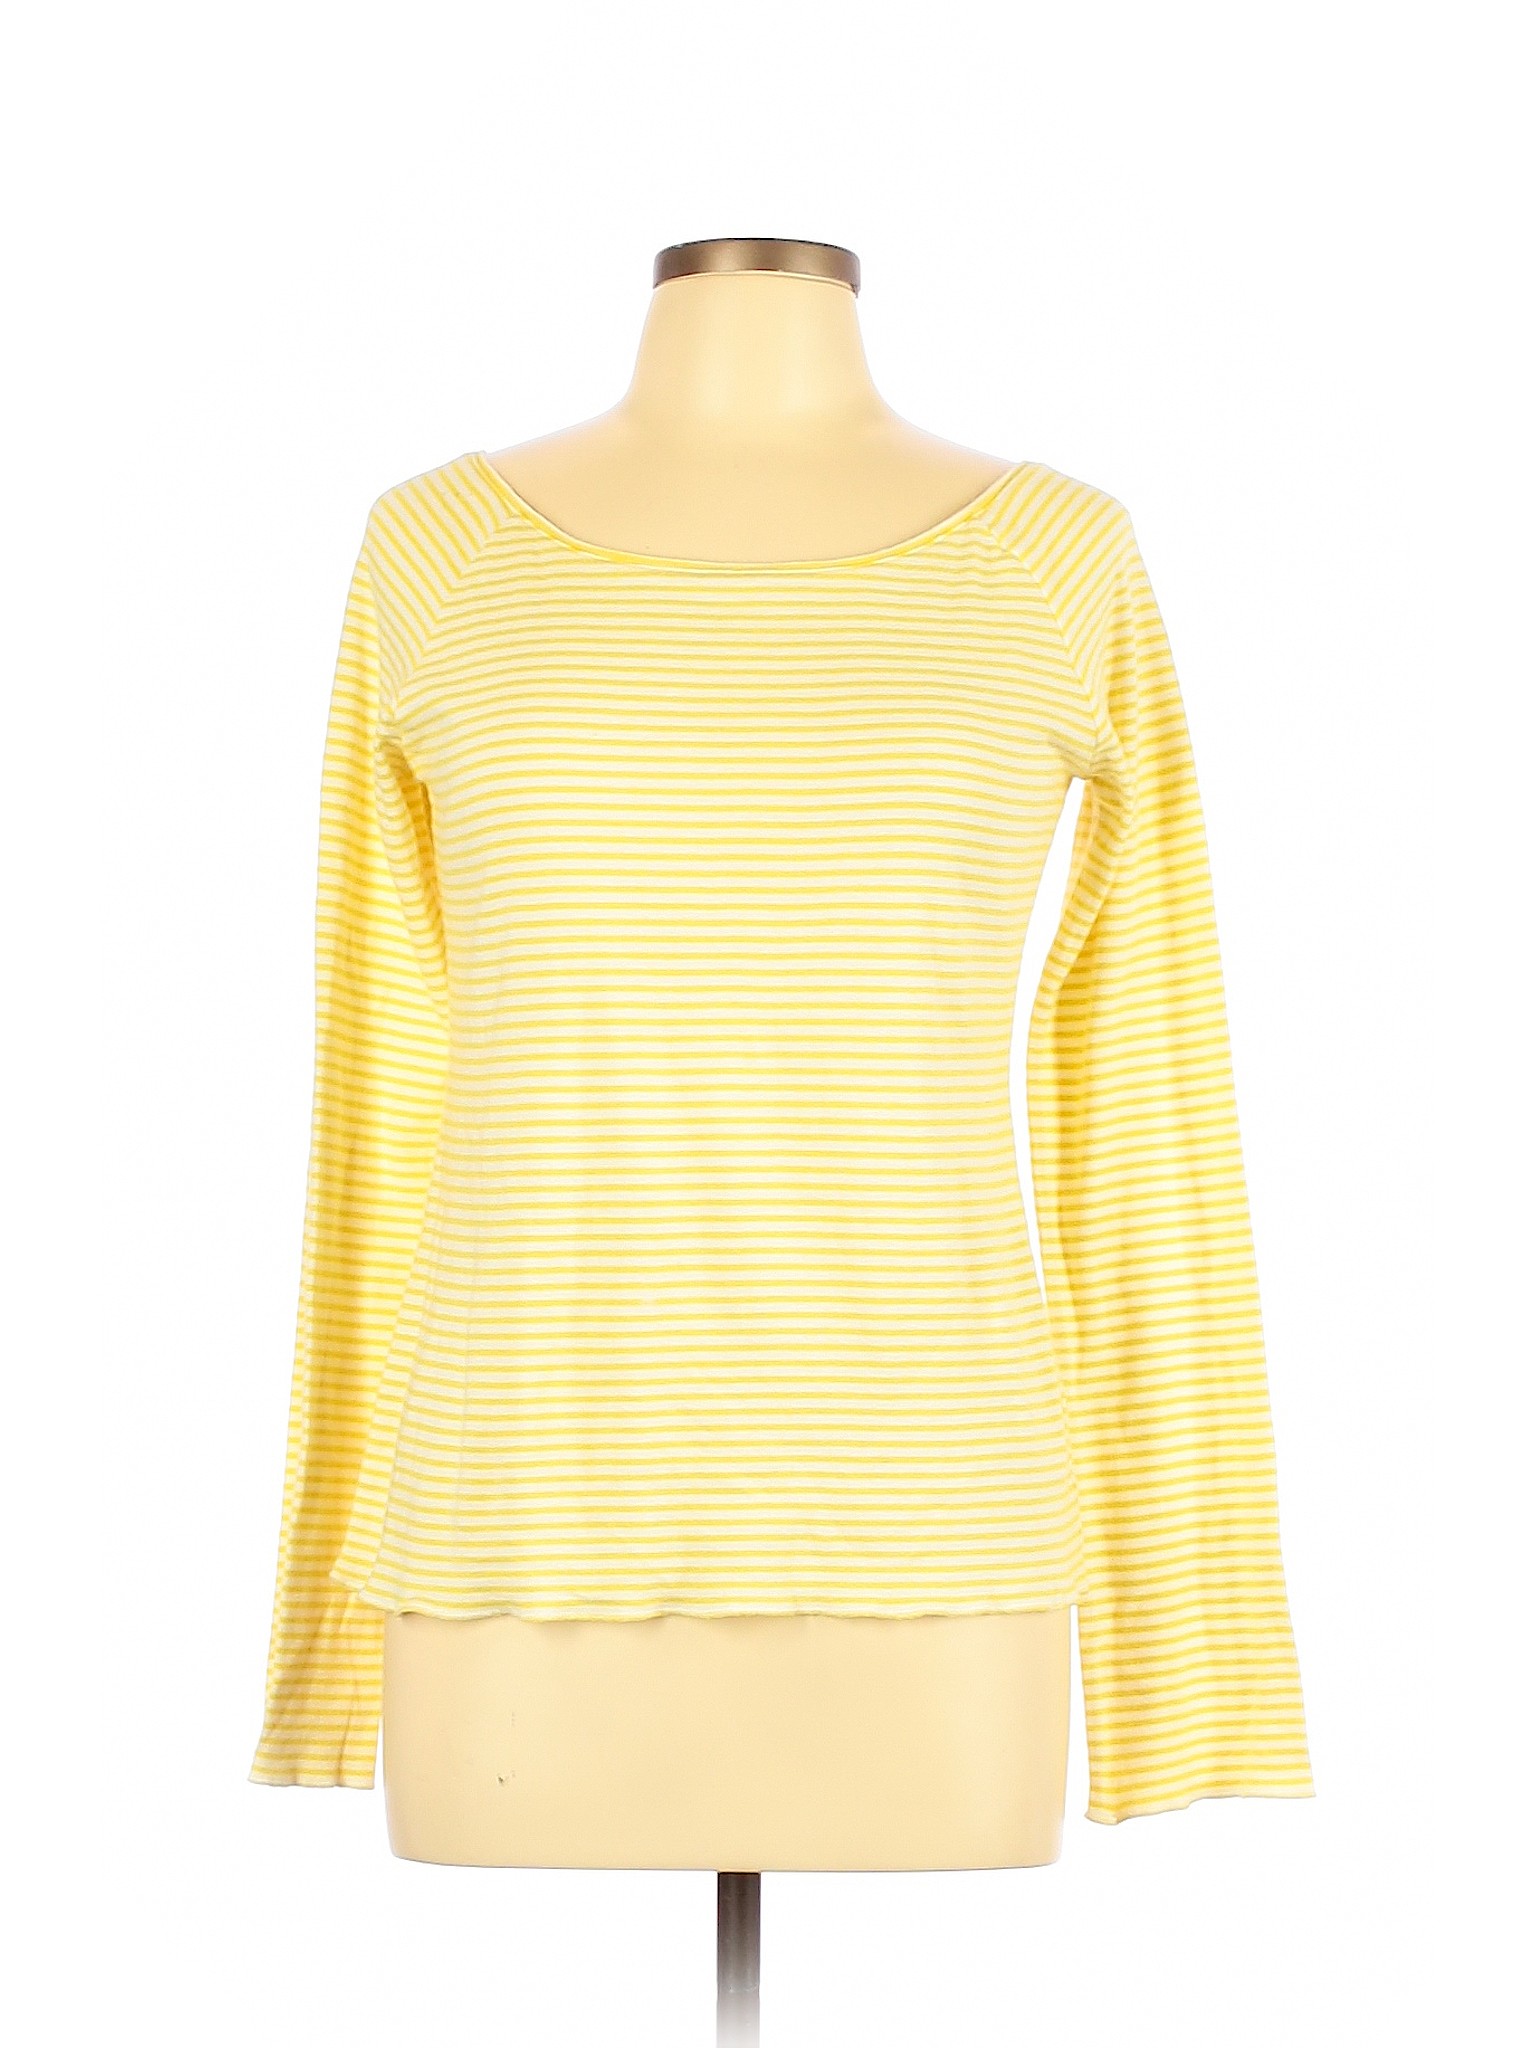 J.Crew Women Yellow Long Sleeve T-Shirt L | eBay